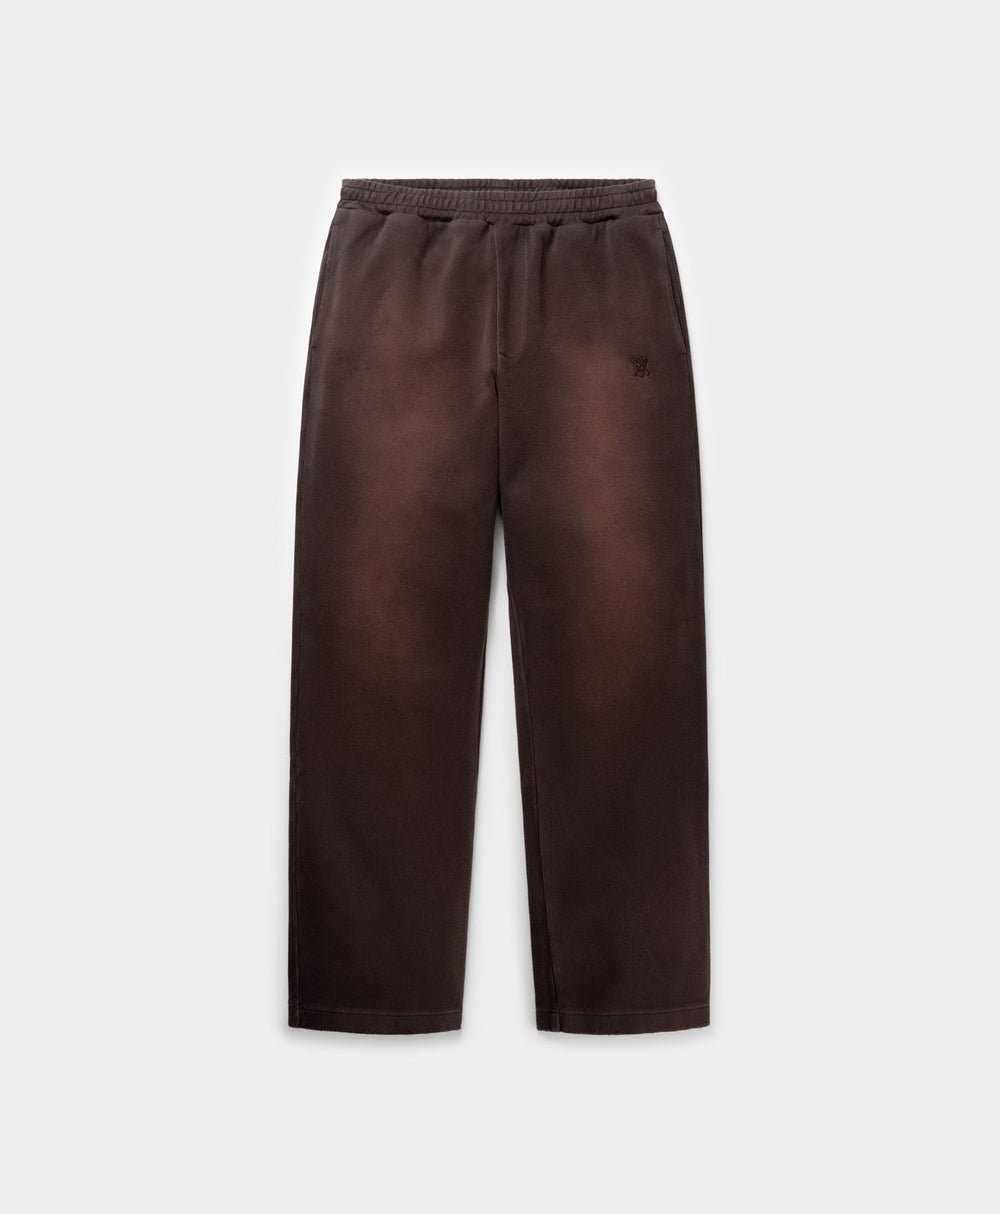 DP - Chocolate Brown Rodell Pants - Packshot - Front